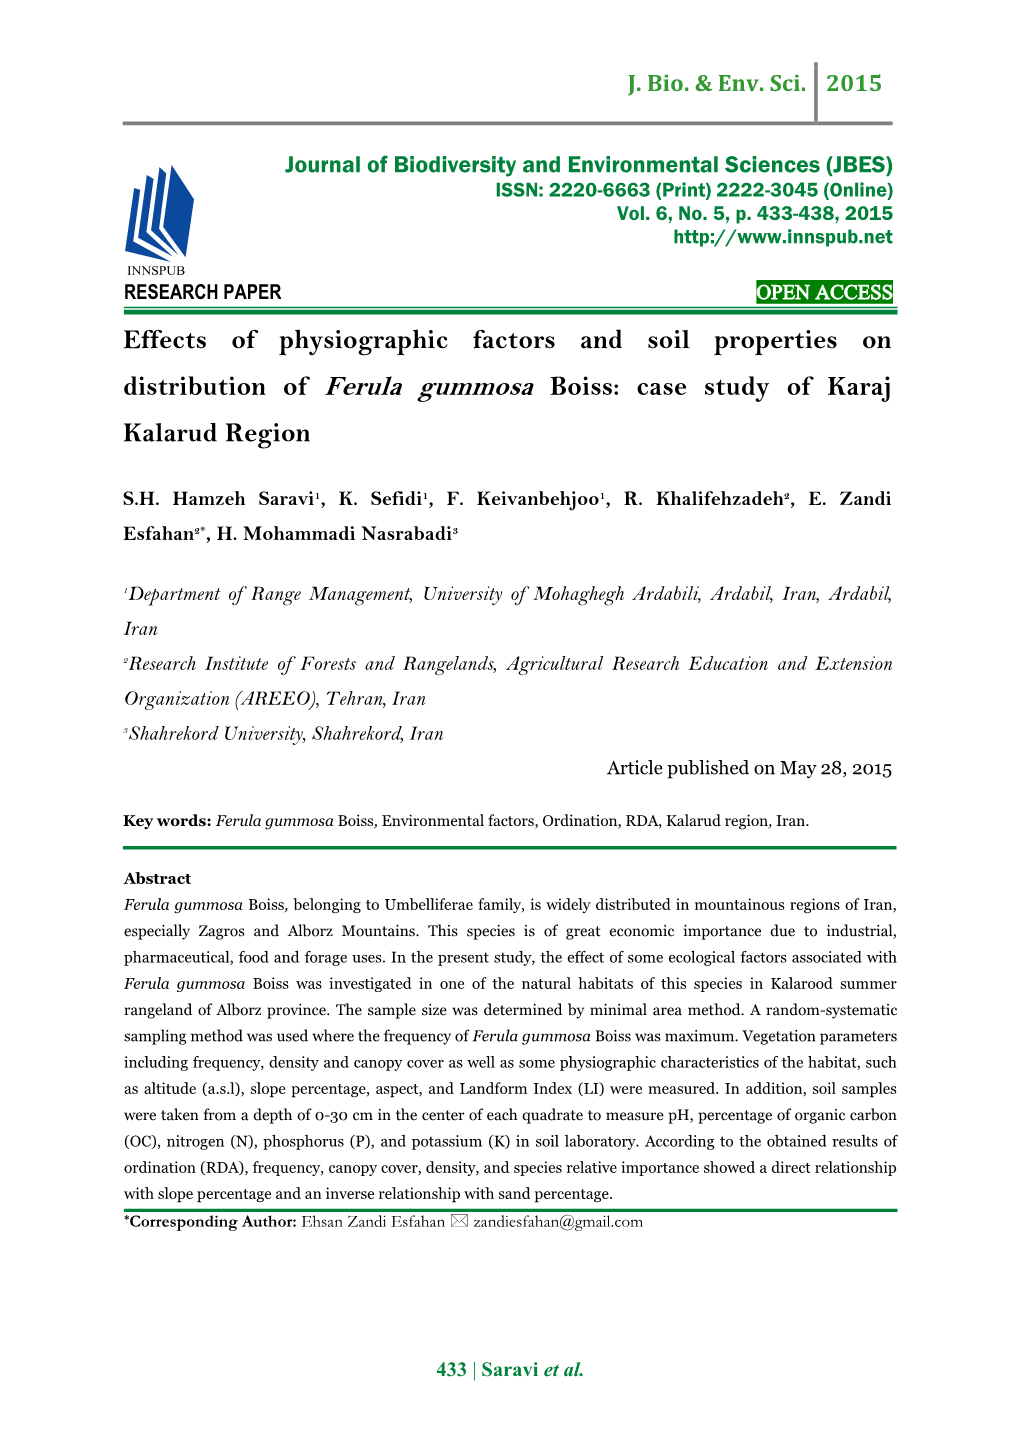 Effects of Physiographic Factors and Soil Properties on Distribution of Ferula Gummosa Boiss: Case Study of Karaj Kalarud Region